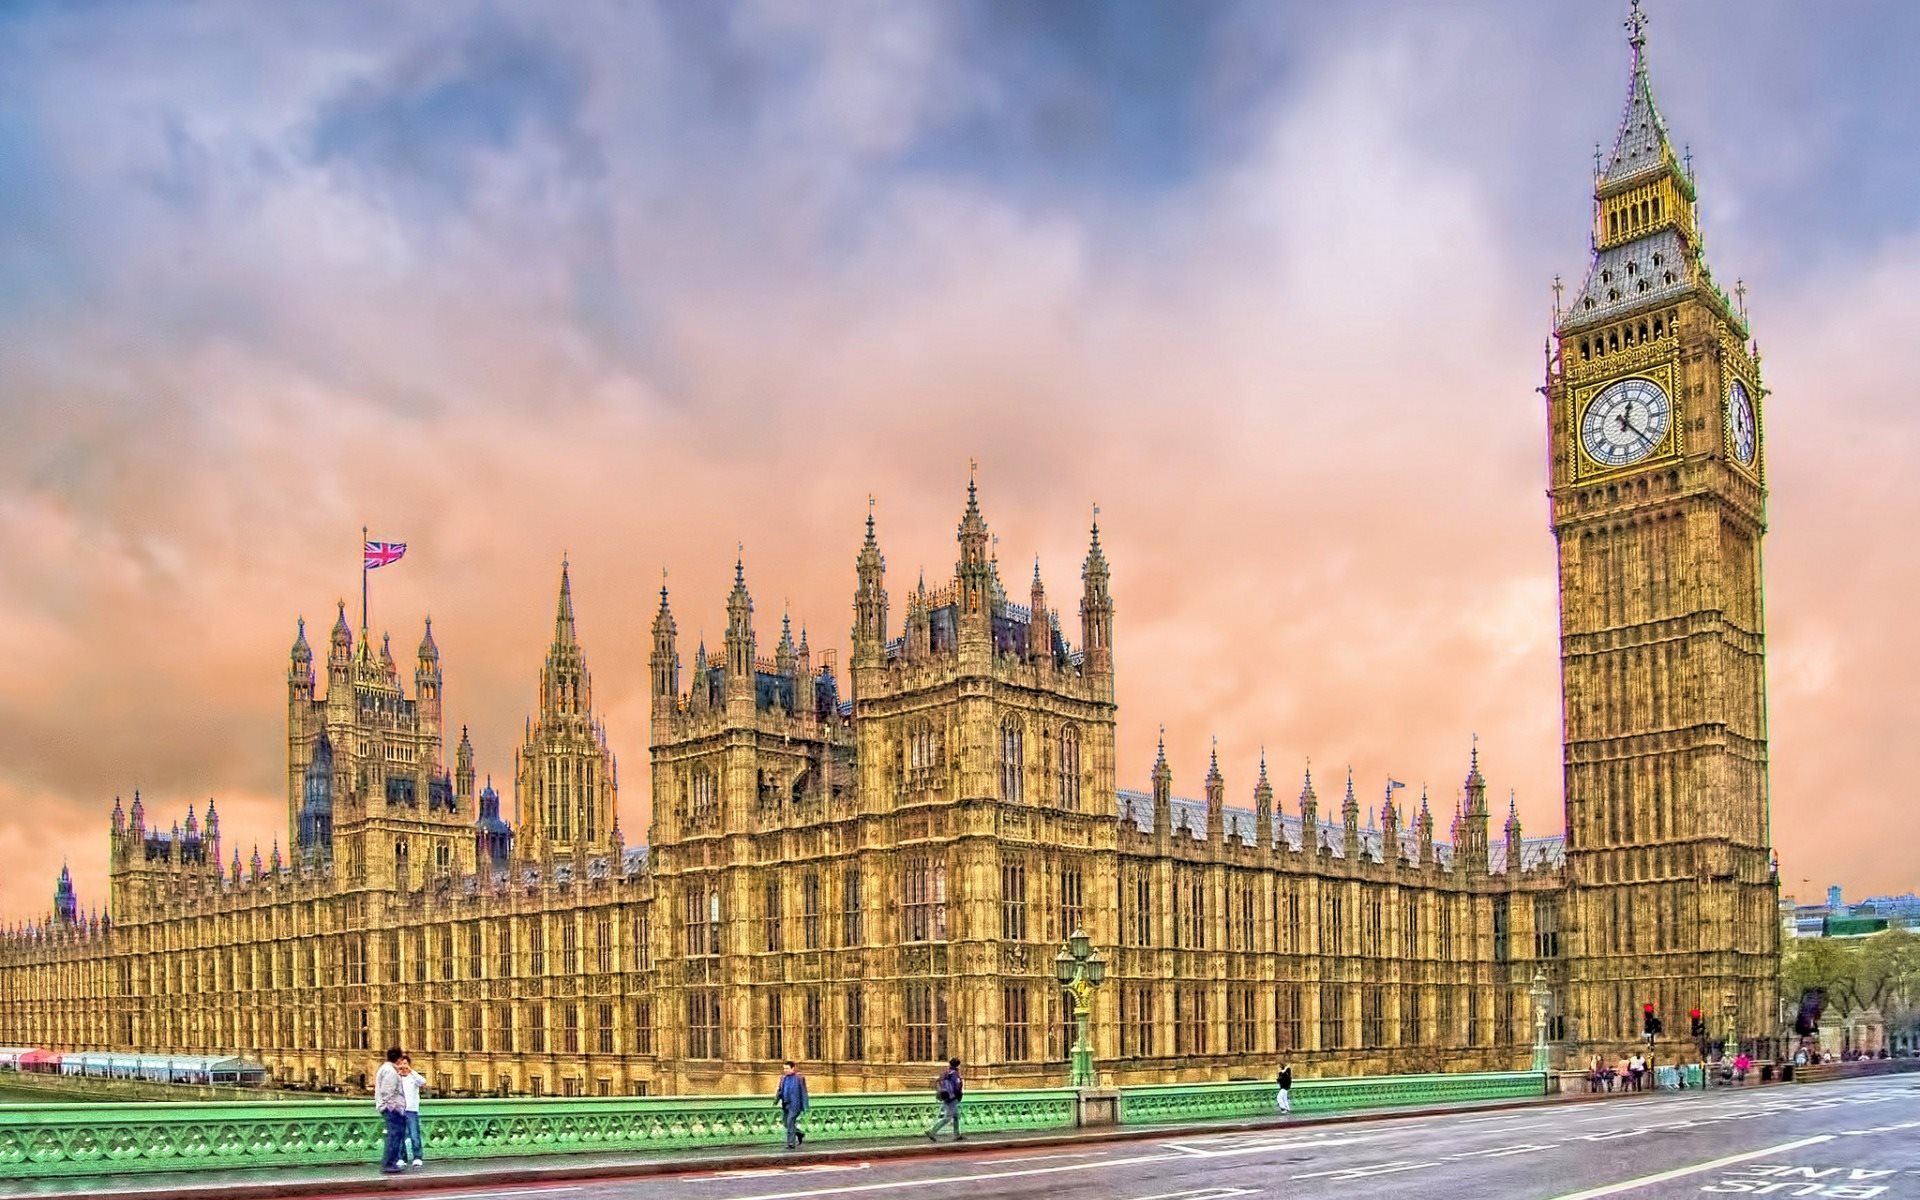 England : 30 HD 1080p England Wallpaper Backgrounds For Free - Cue autonomous regions for england.